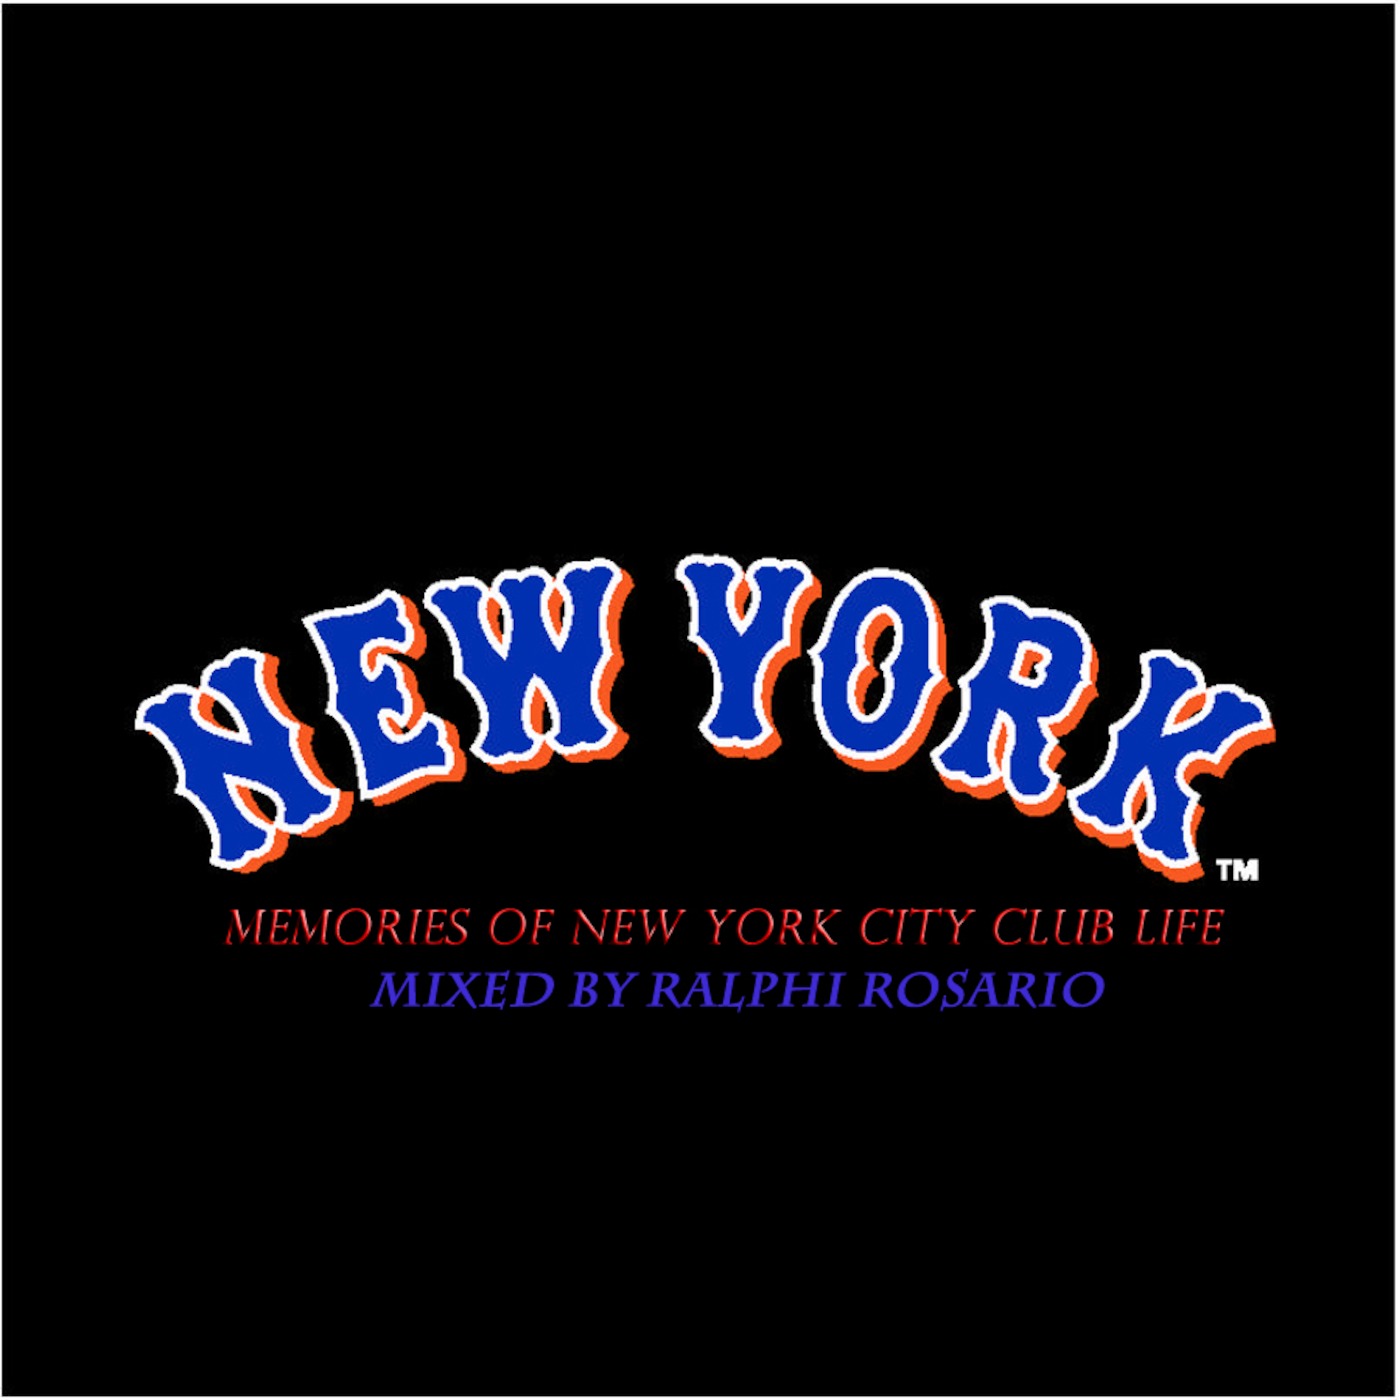 Memories of New York City Club Life